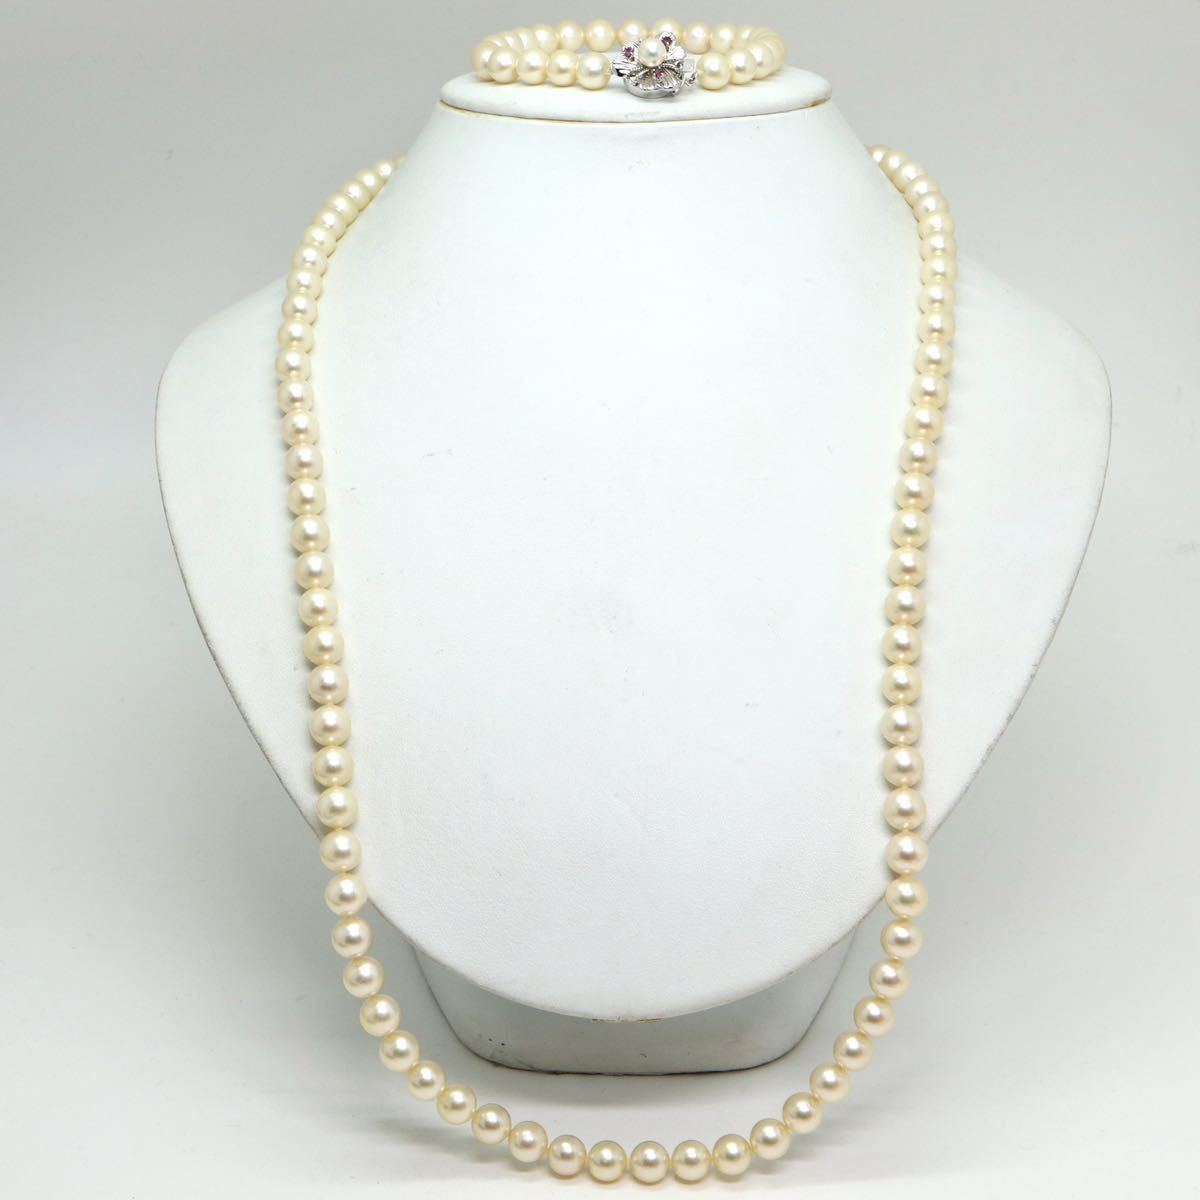 《K14WG天然ルビー付きアコヤ本真珠ネックレス&ブレスレット》D 7.5-8.0mm珠 75.0g 68cm 20cm pearl necklace ジュエリー jewelry EC5/FA0_画像2